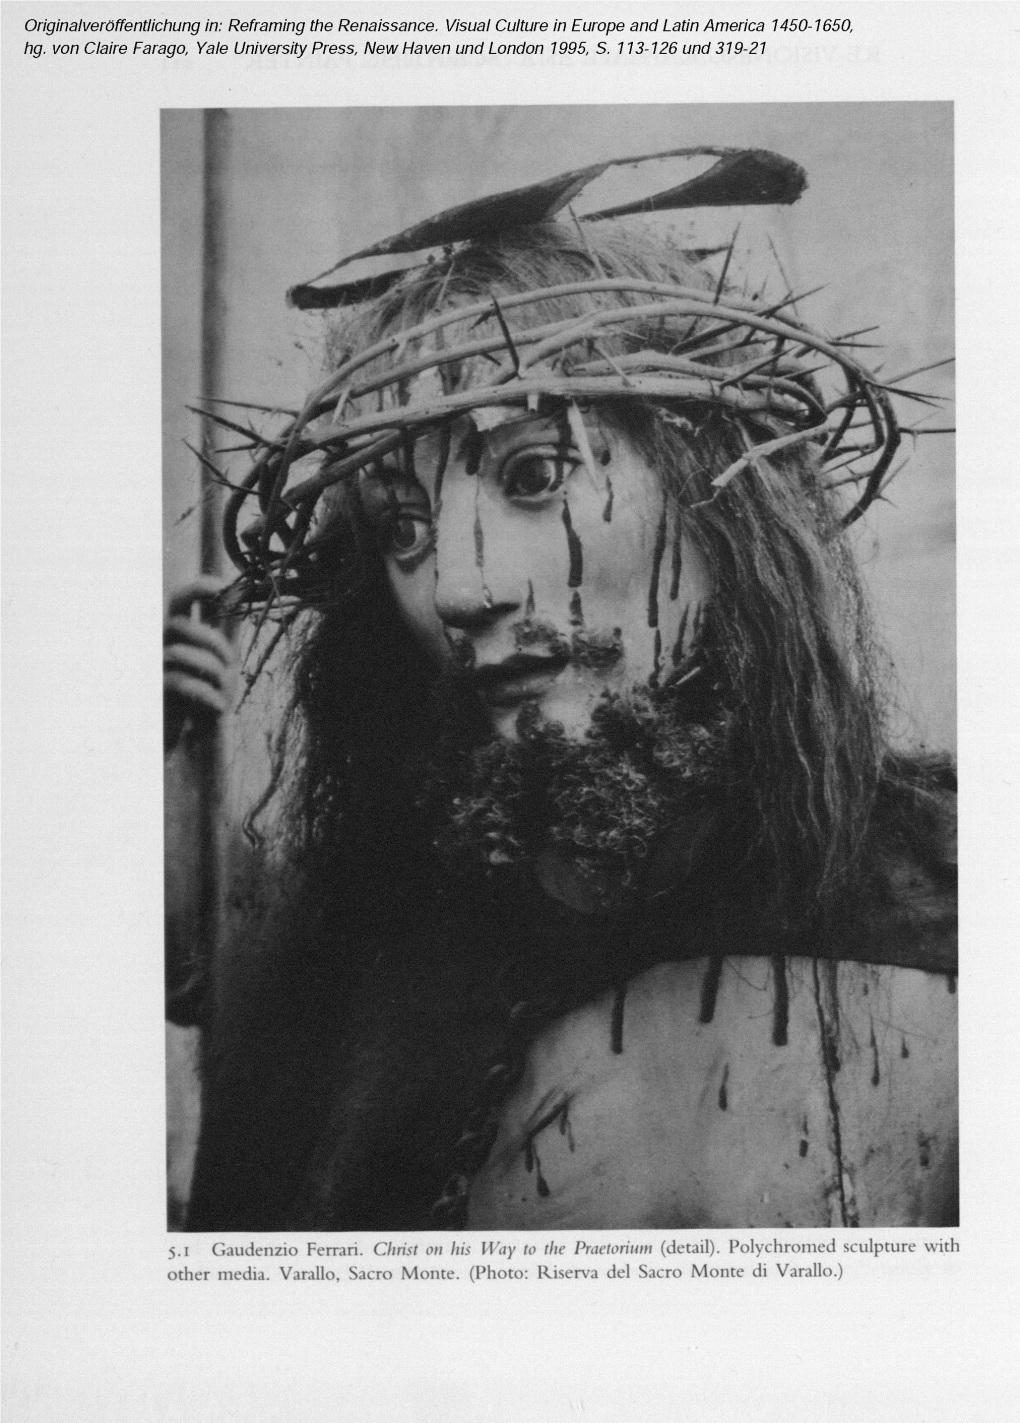 5.1 Gaudenzio Ferrari. Christ on His Way to the Praetorimn (Detail). Polychromed Sculpture with Other Media. Varallo, Sacro Monte